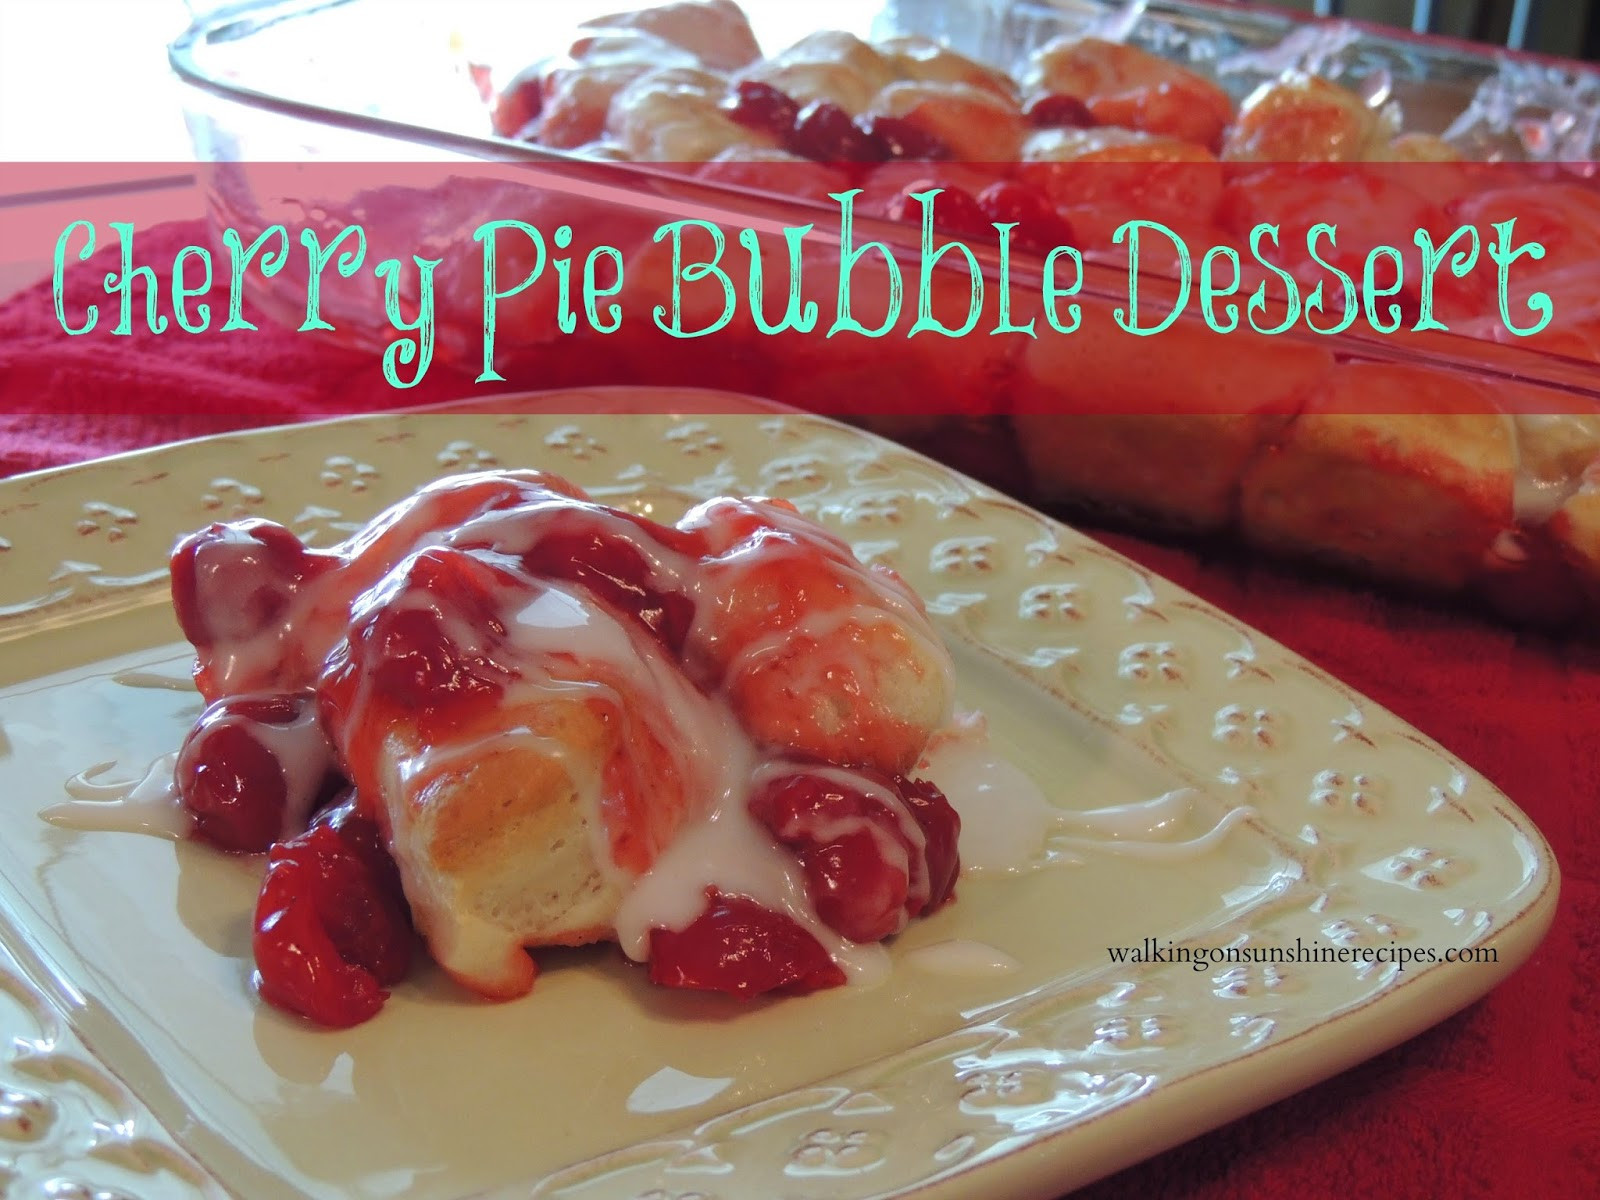 Cherry Pie Filling Desserts
 Cherry Pie Bubble Dessert Walking on Sunshine